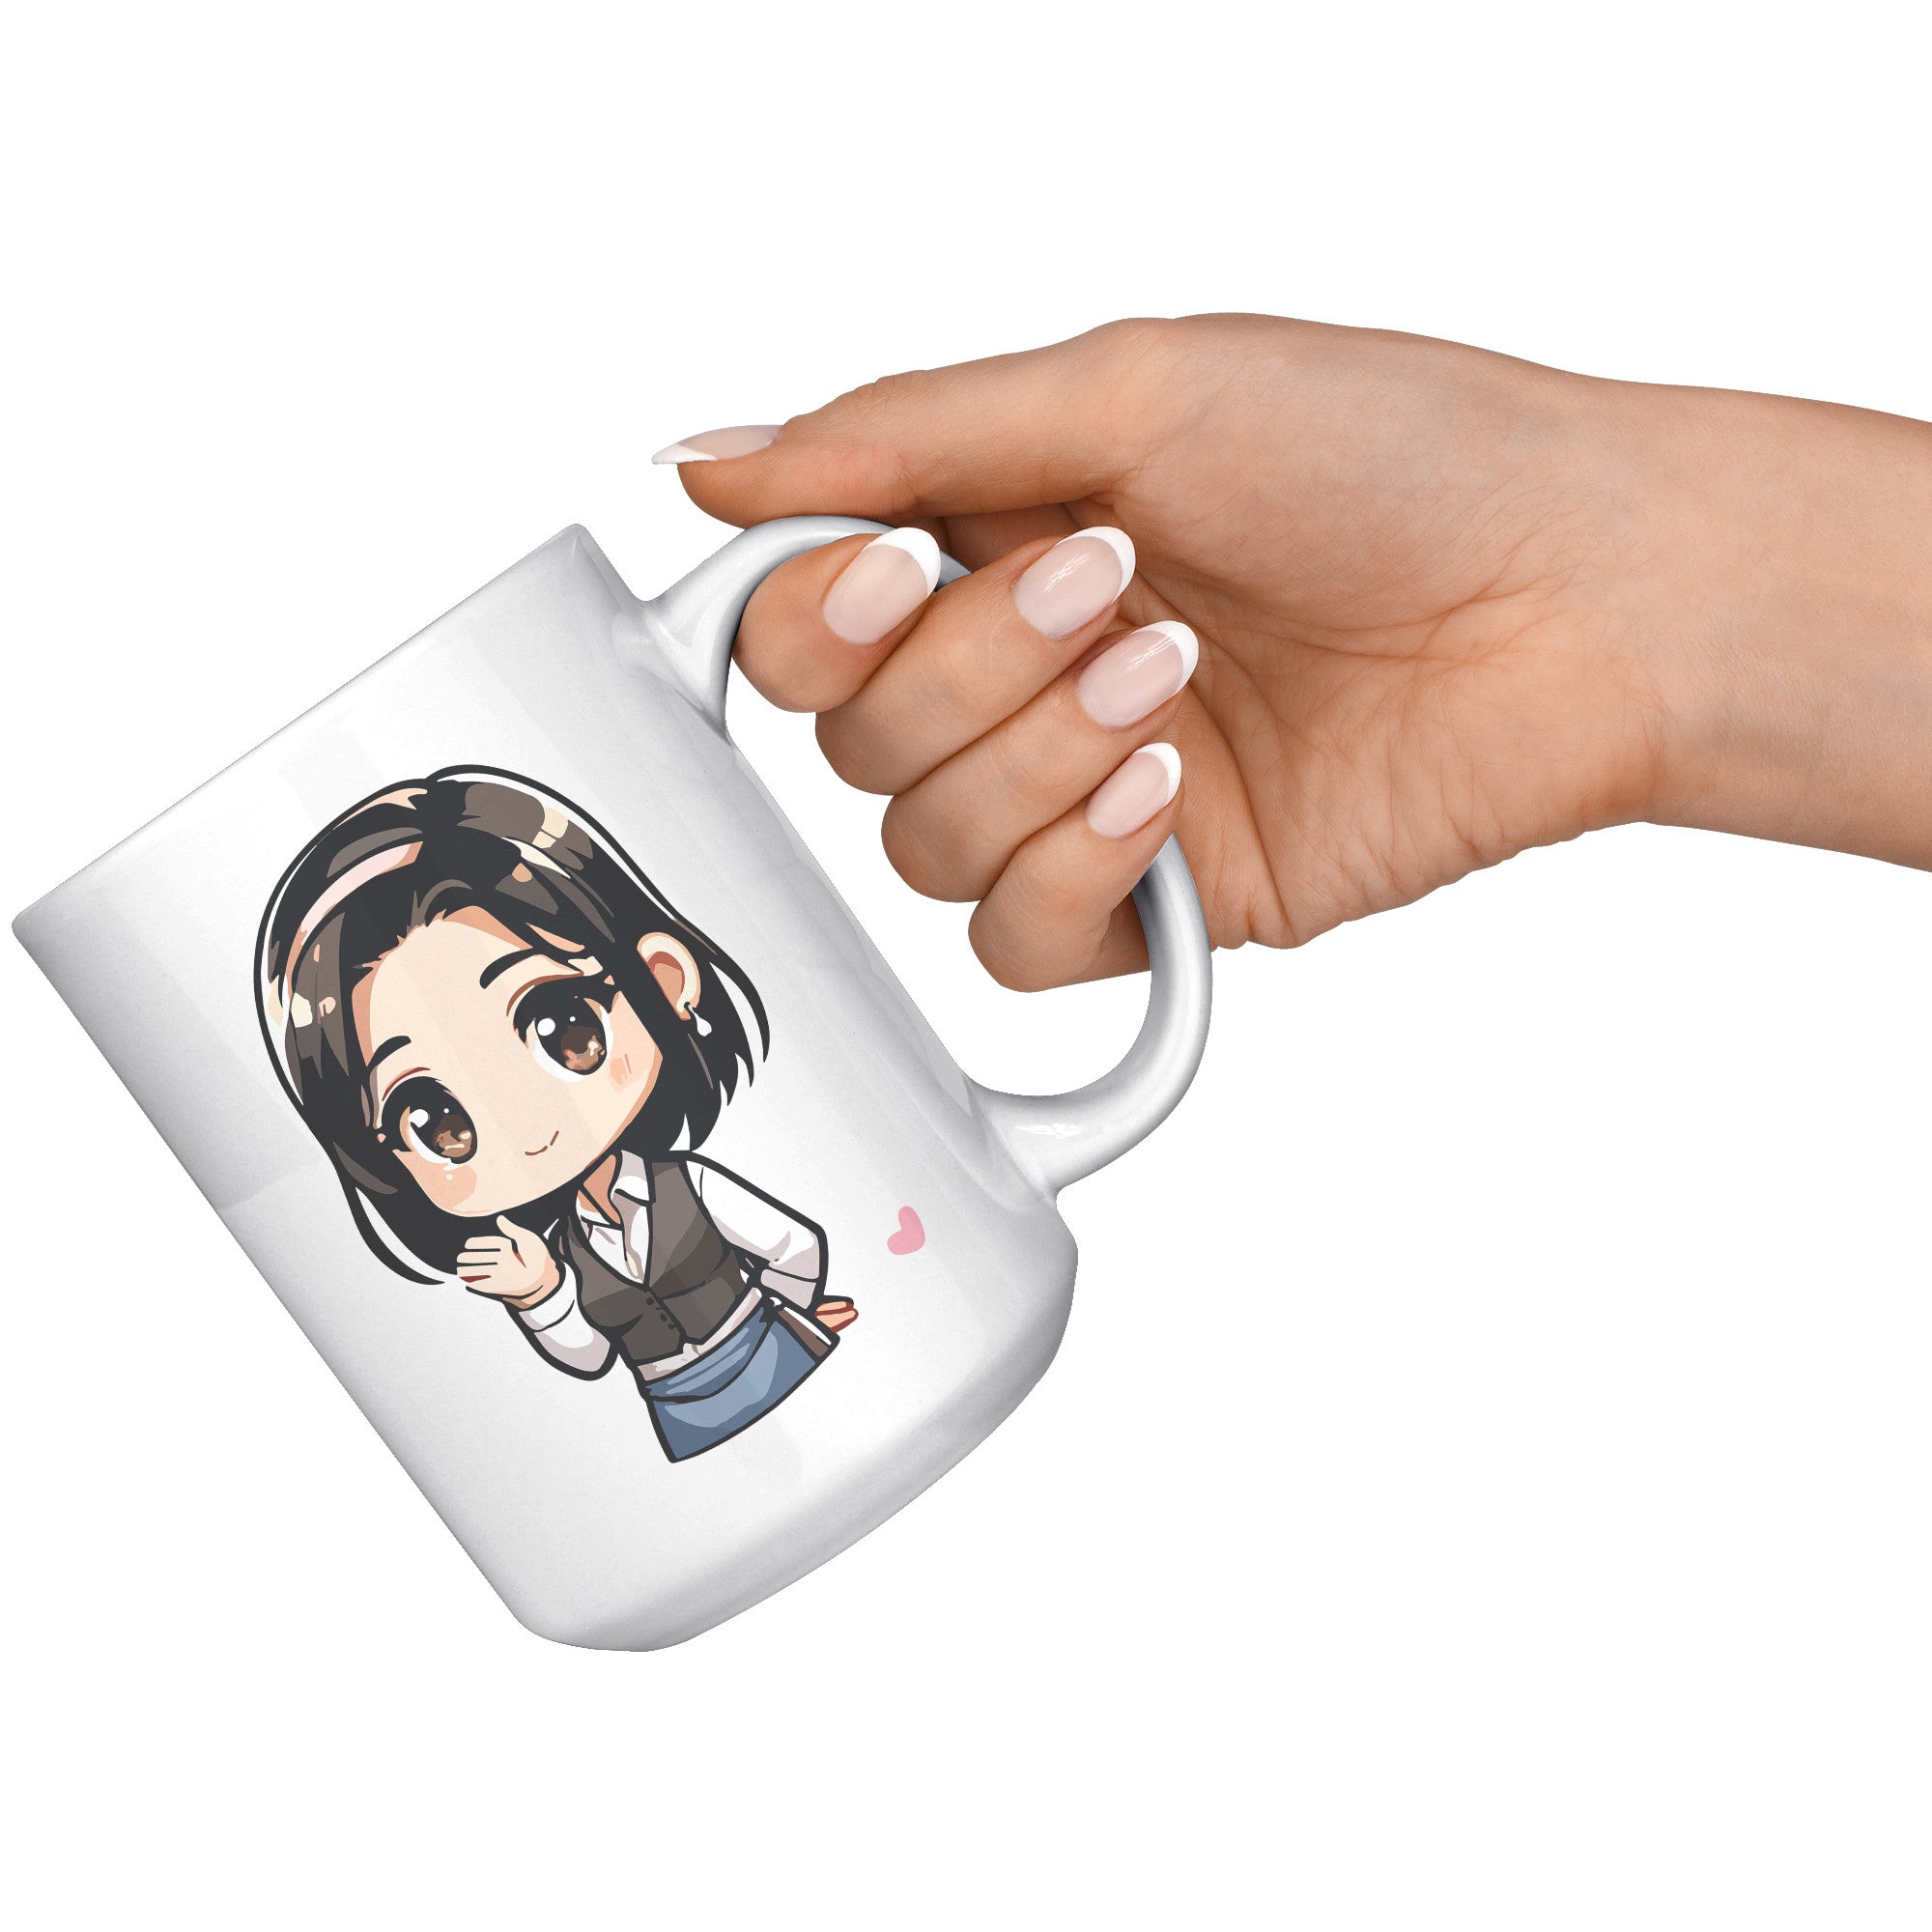 "Marites Gossip Queen Coffee Mug - Cute Cartoon 'Ano Ang Latest?' Cup - Perfect Chismosa Gift - Filipino Slang Tea Mug" - E1